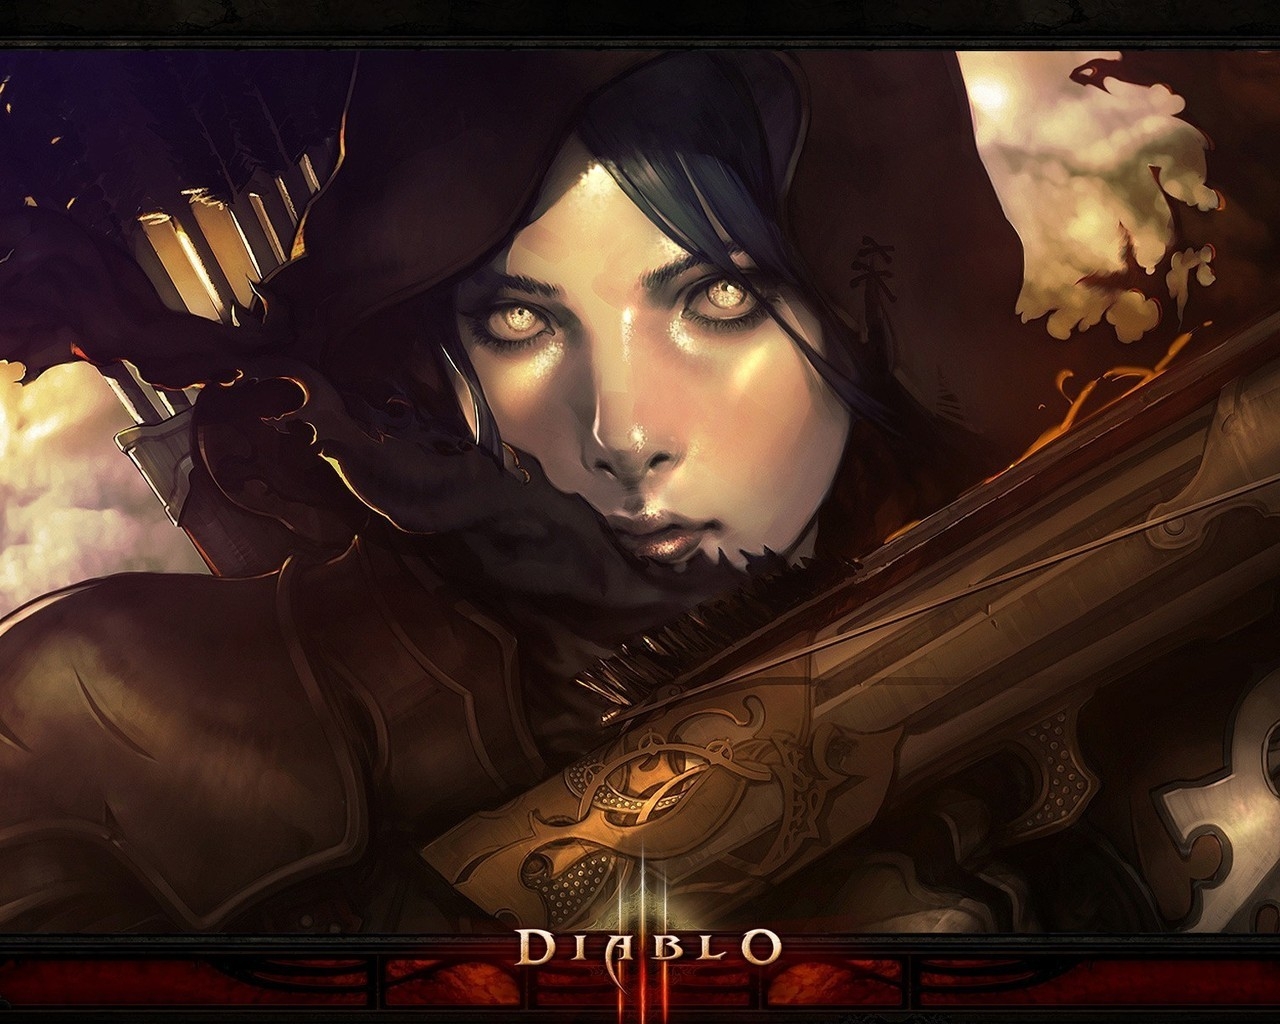 Diablo III Character for 1280 x 1024 resolution